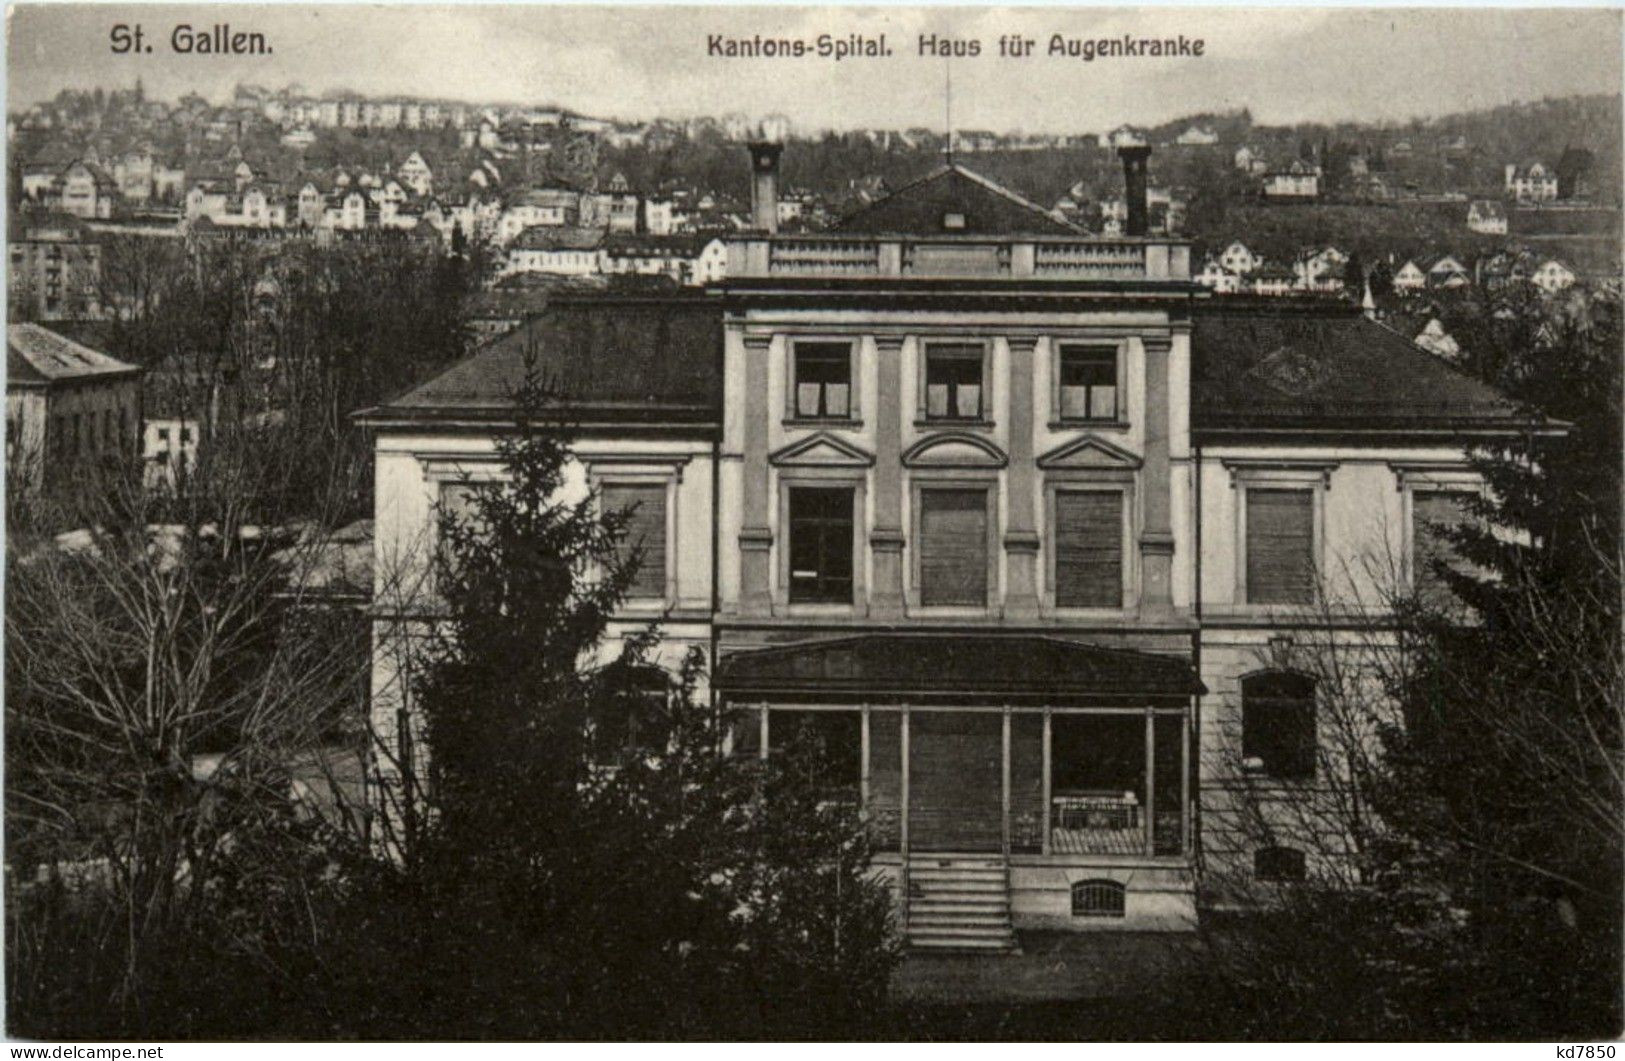 St. Gallen - Kantons Spital - St. Gallen